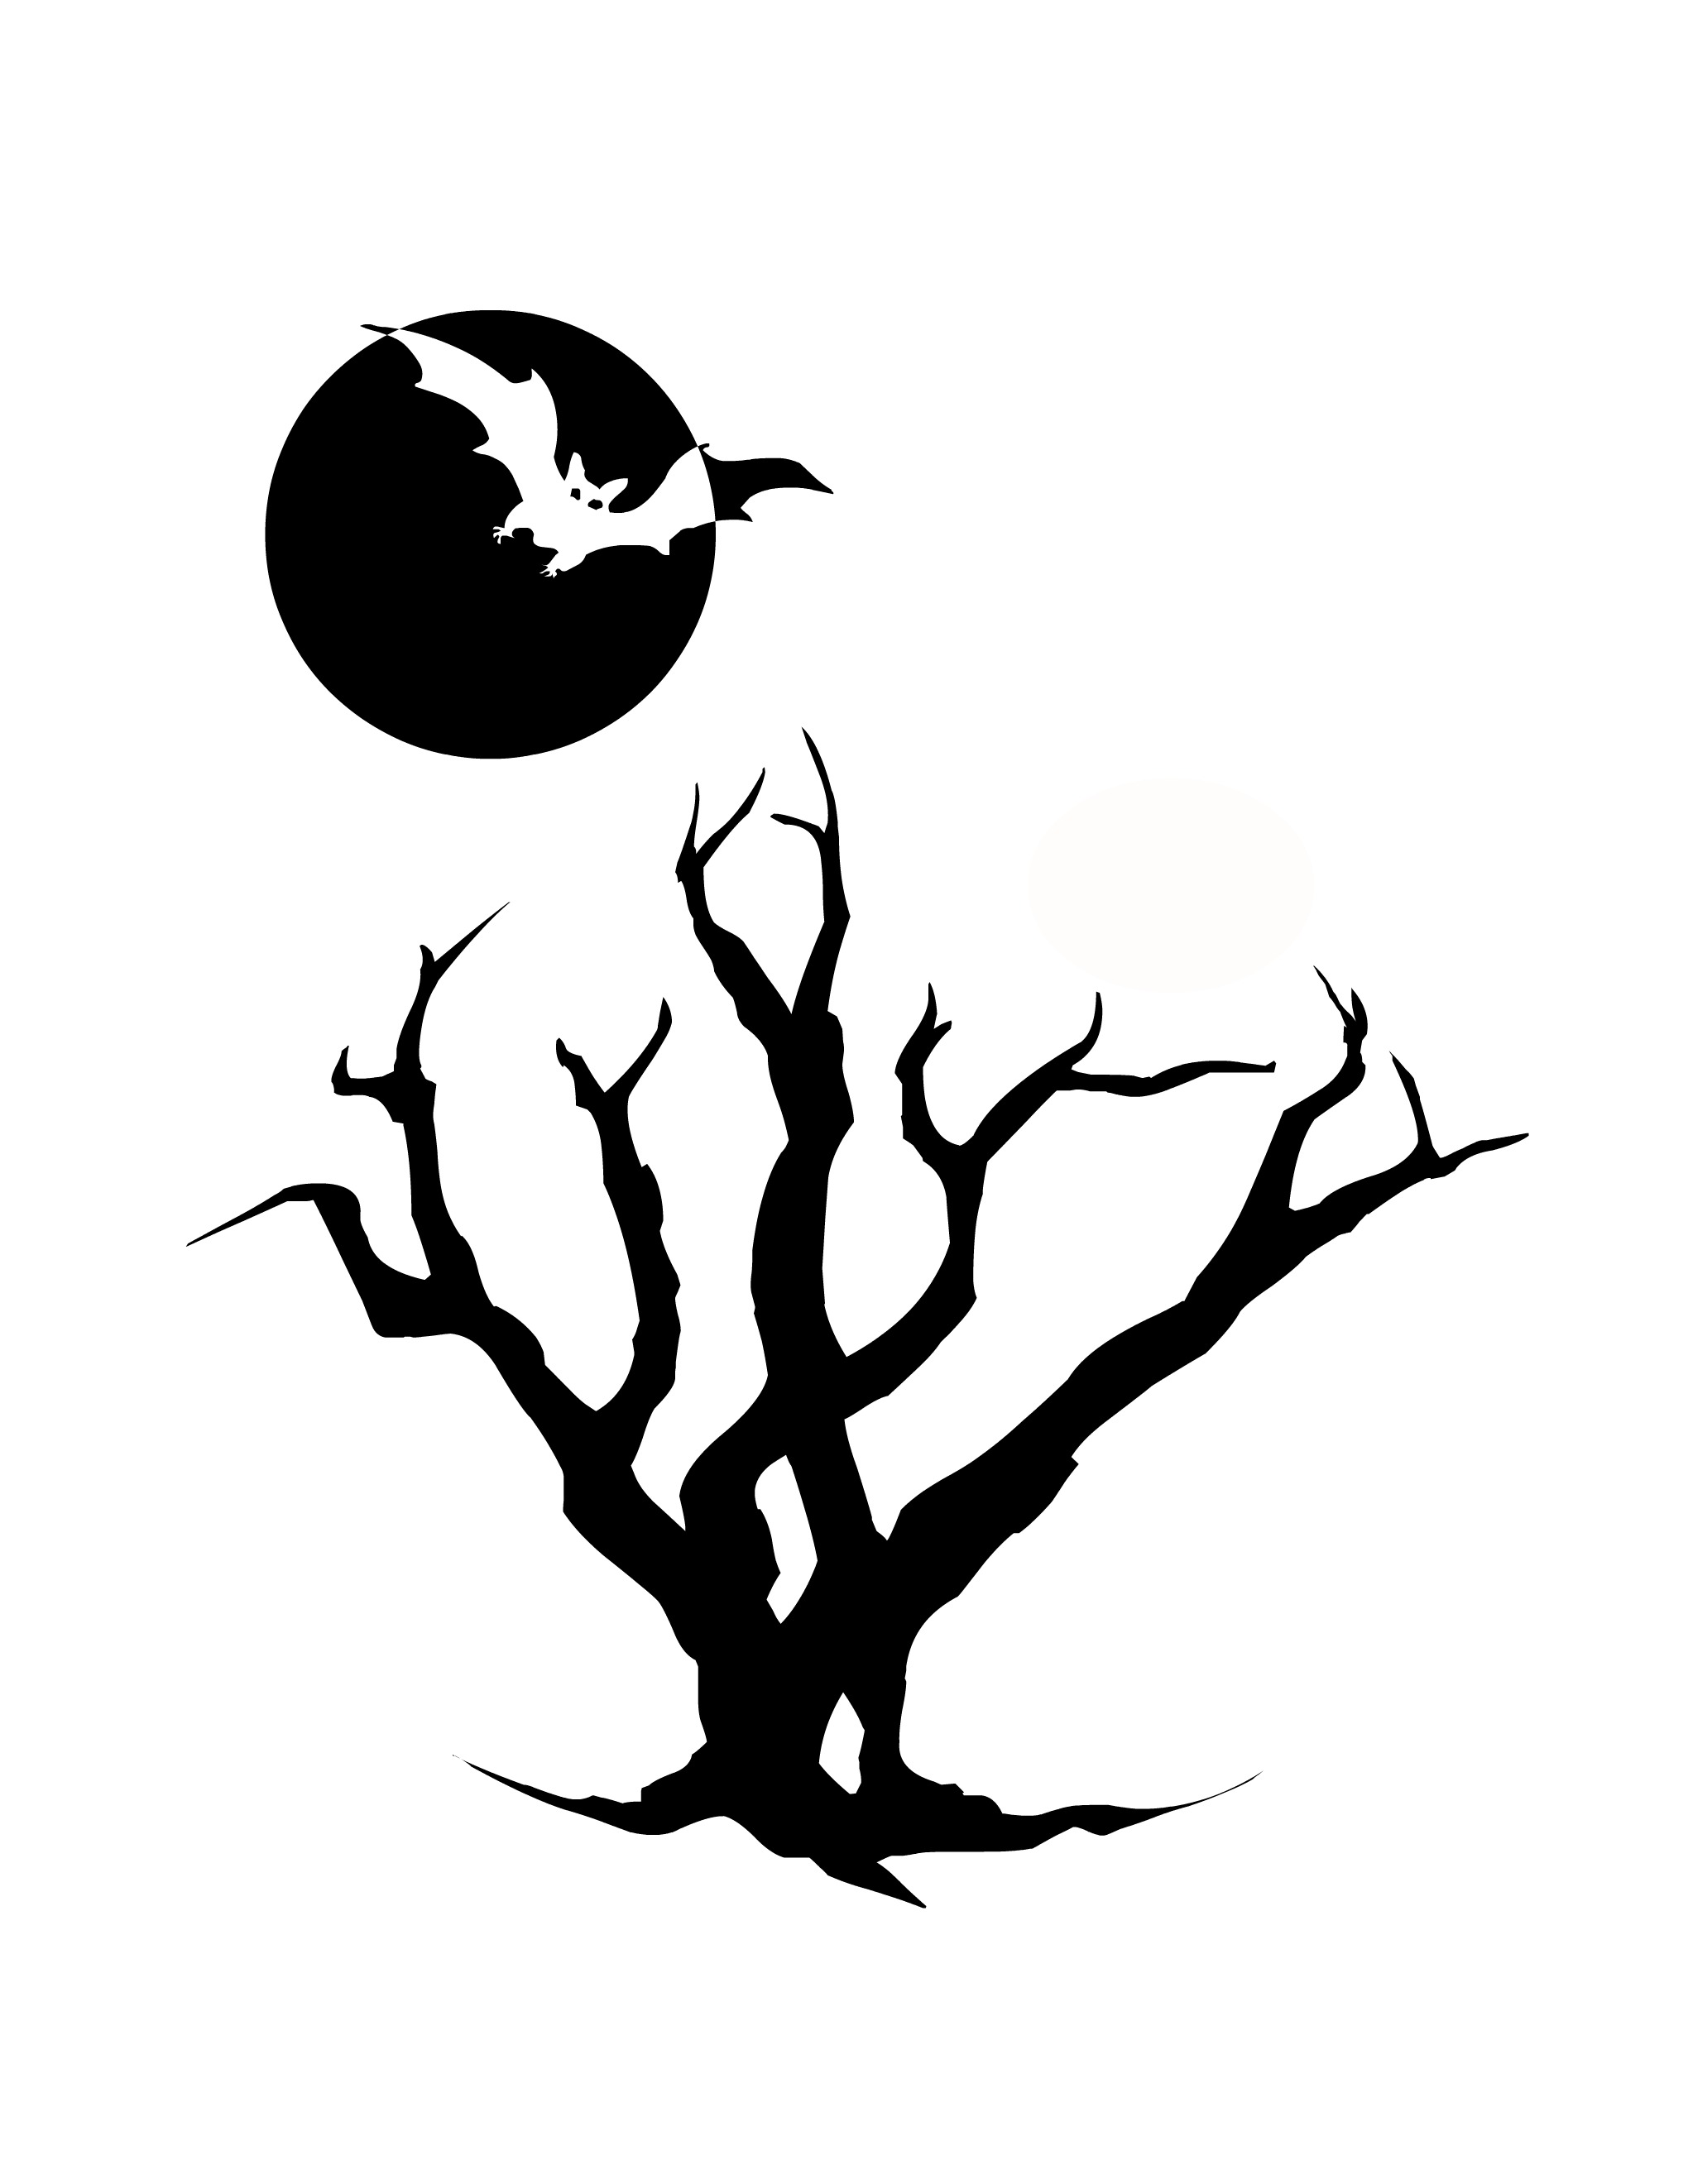 Spooky tree clipart outline - ClipartFox